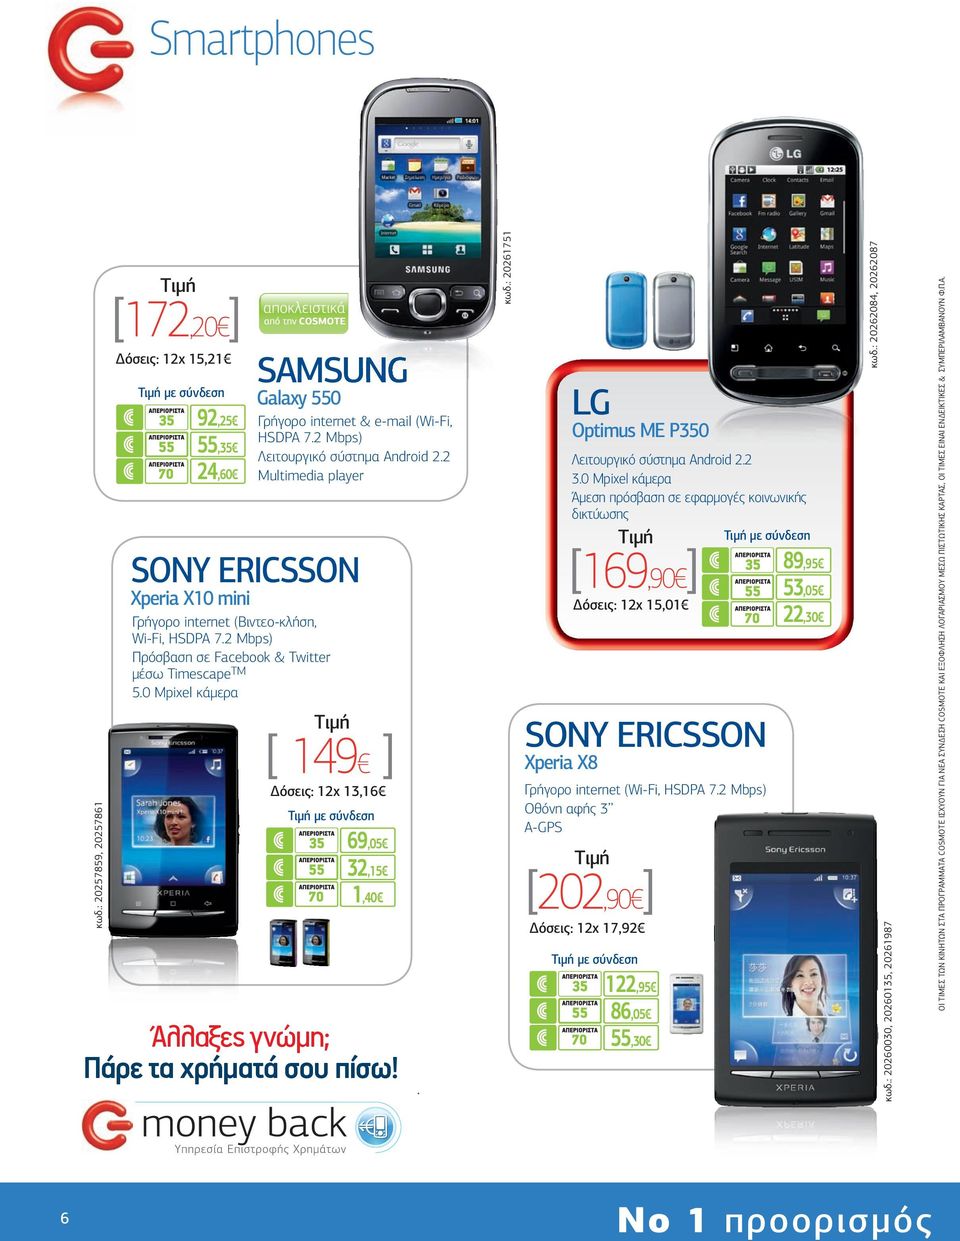 2 Multimedia player SONY ERICSSON Xperia X10 mini [ 149 ] όσεις: 12χ 13,16 69,05 32,15 1,40 Άλλαξες γνώµη; Πάρε τα χρήµατά σου πίσω! κωδ.: 20261751 LG Optimus ME P350 Λειτουργικό σύστηµα Android 2.